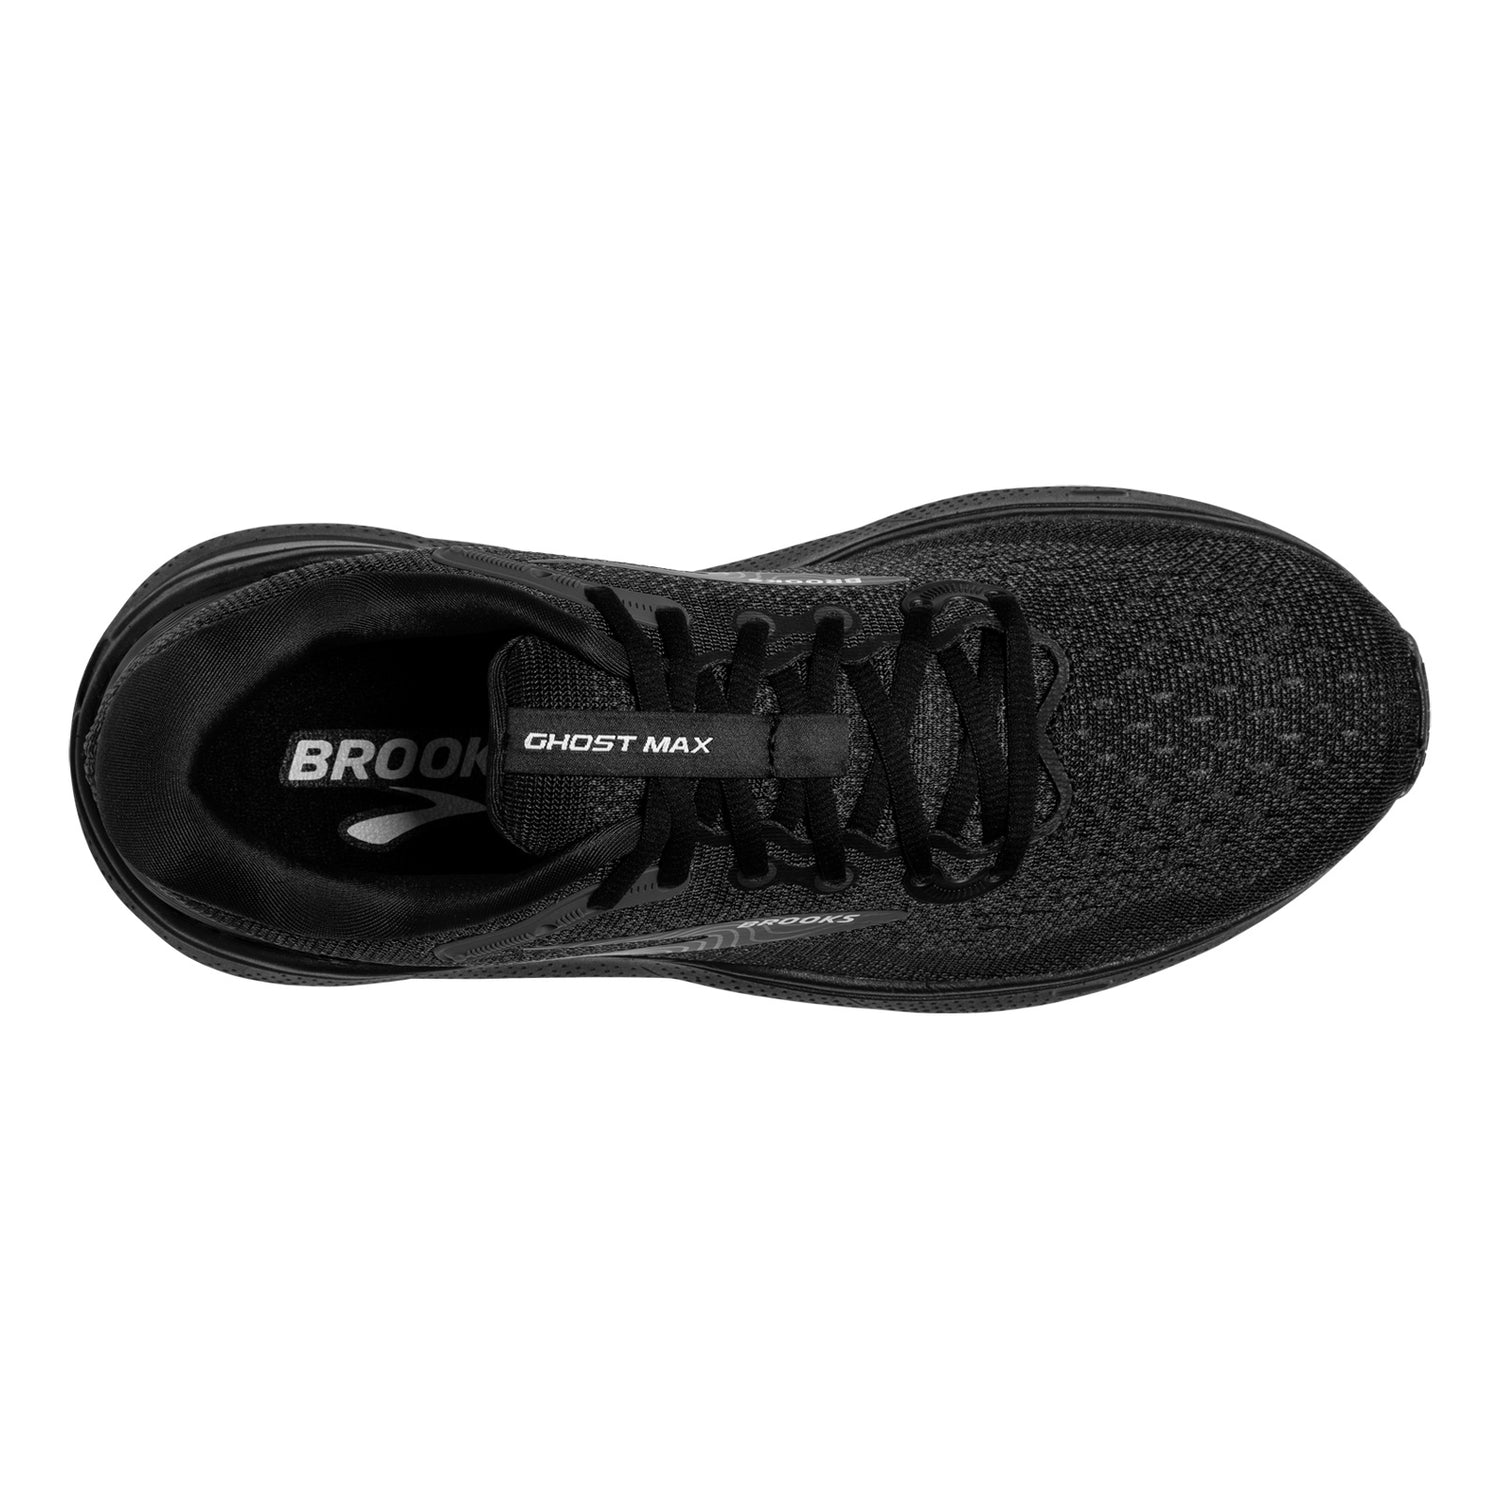 Peltz Shoes  Women's Brooks Ghost Max Running Shoe - Extra Wide Width Black/Black/Ebony 120395 2E 020